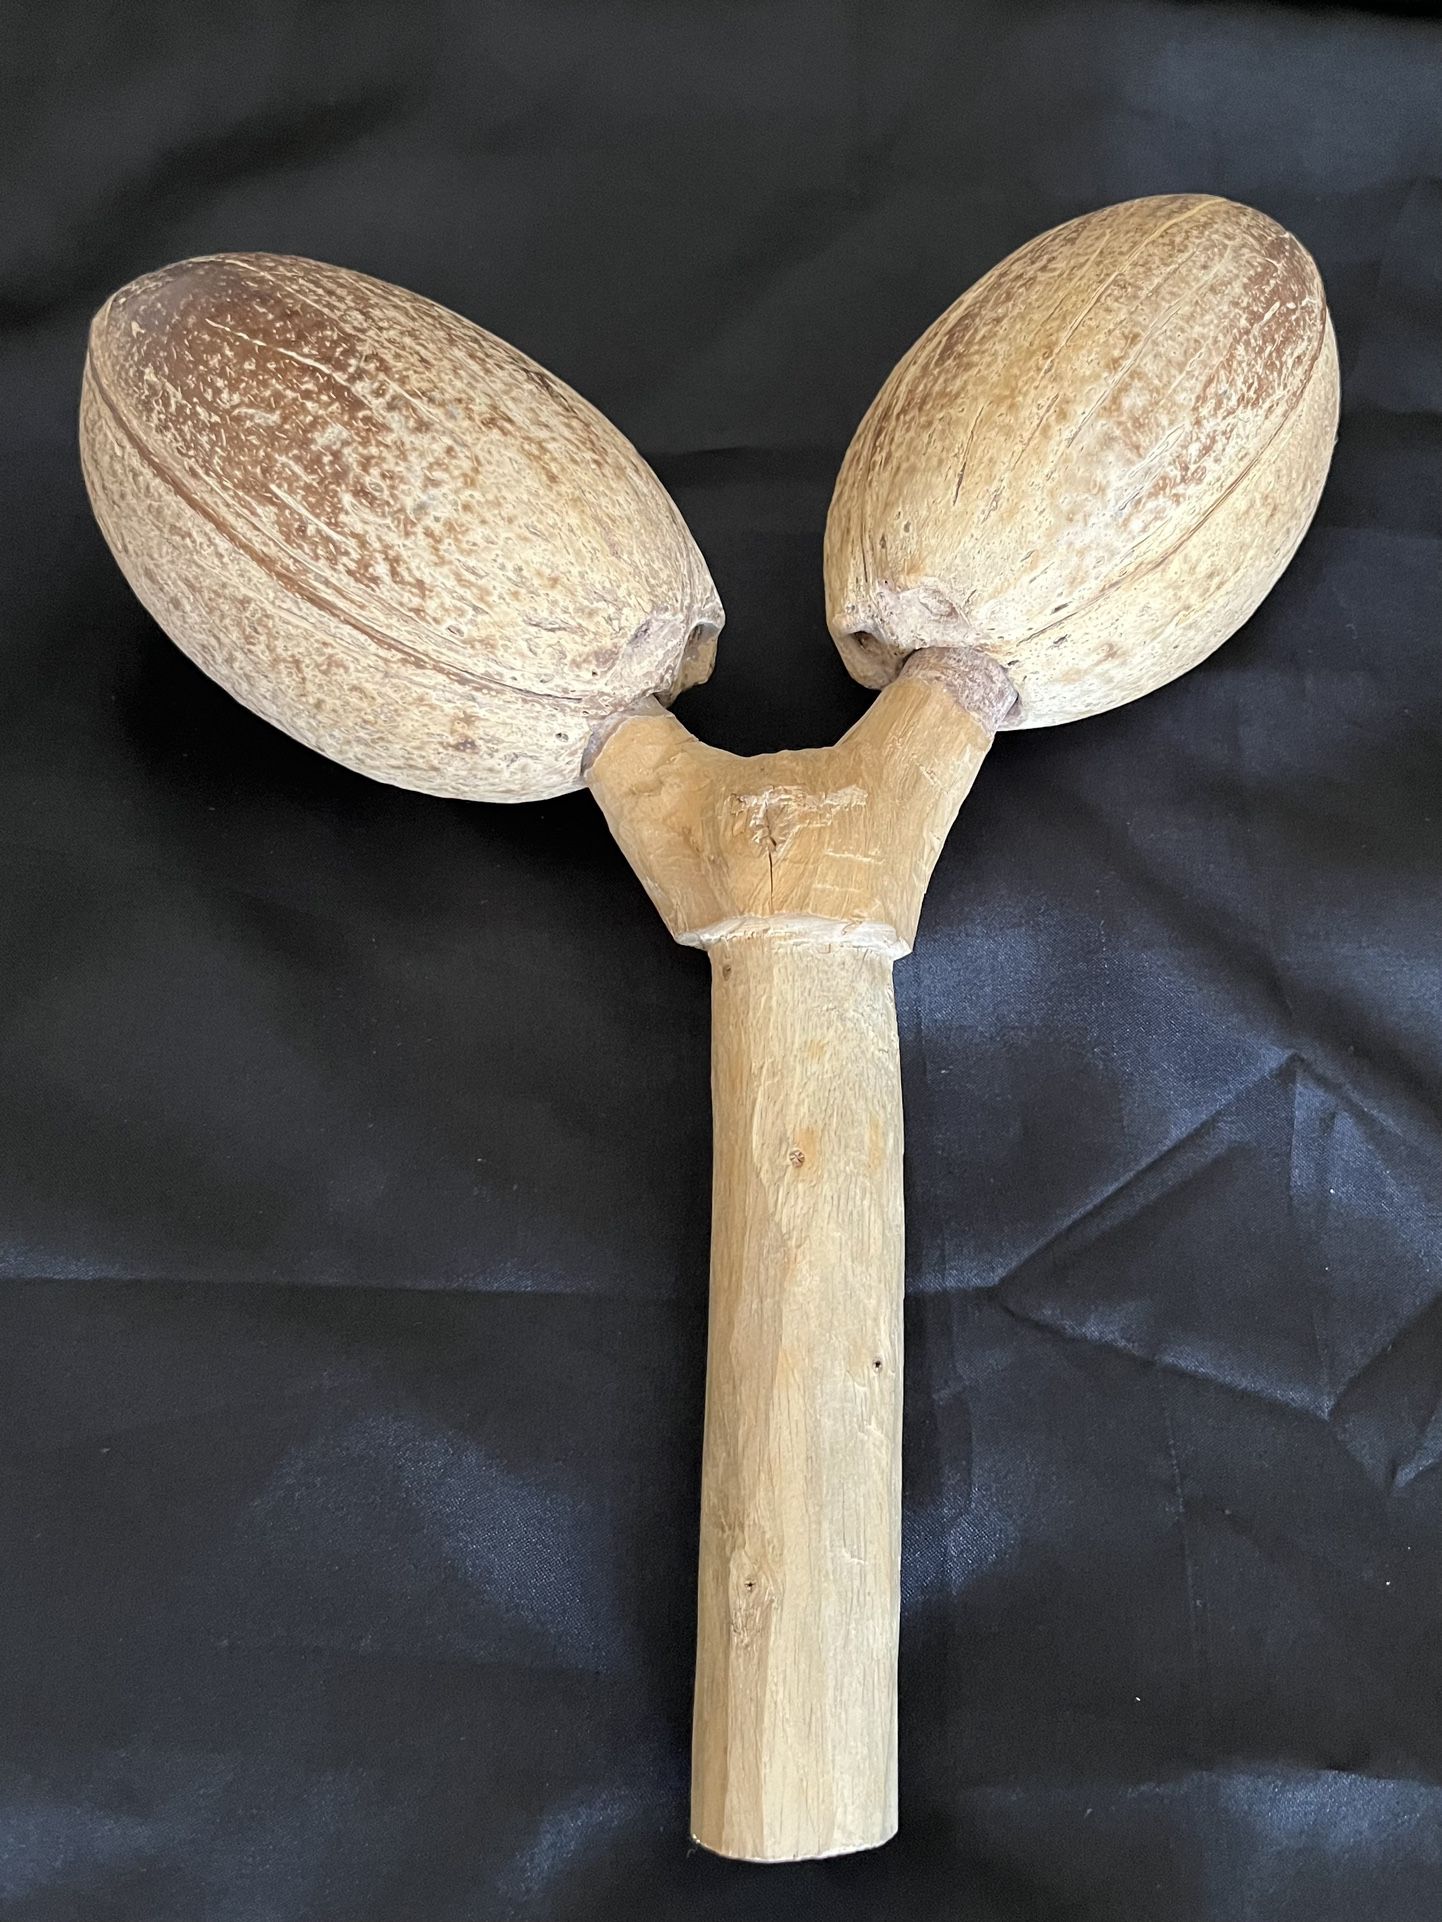 Double Coconut Rattle Rare Handmade 10” Shaker Wooden Handle